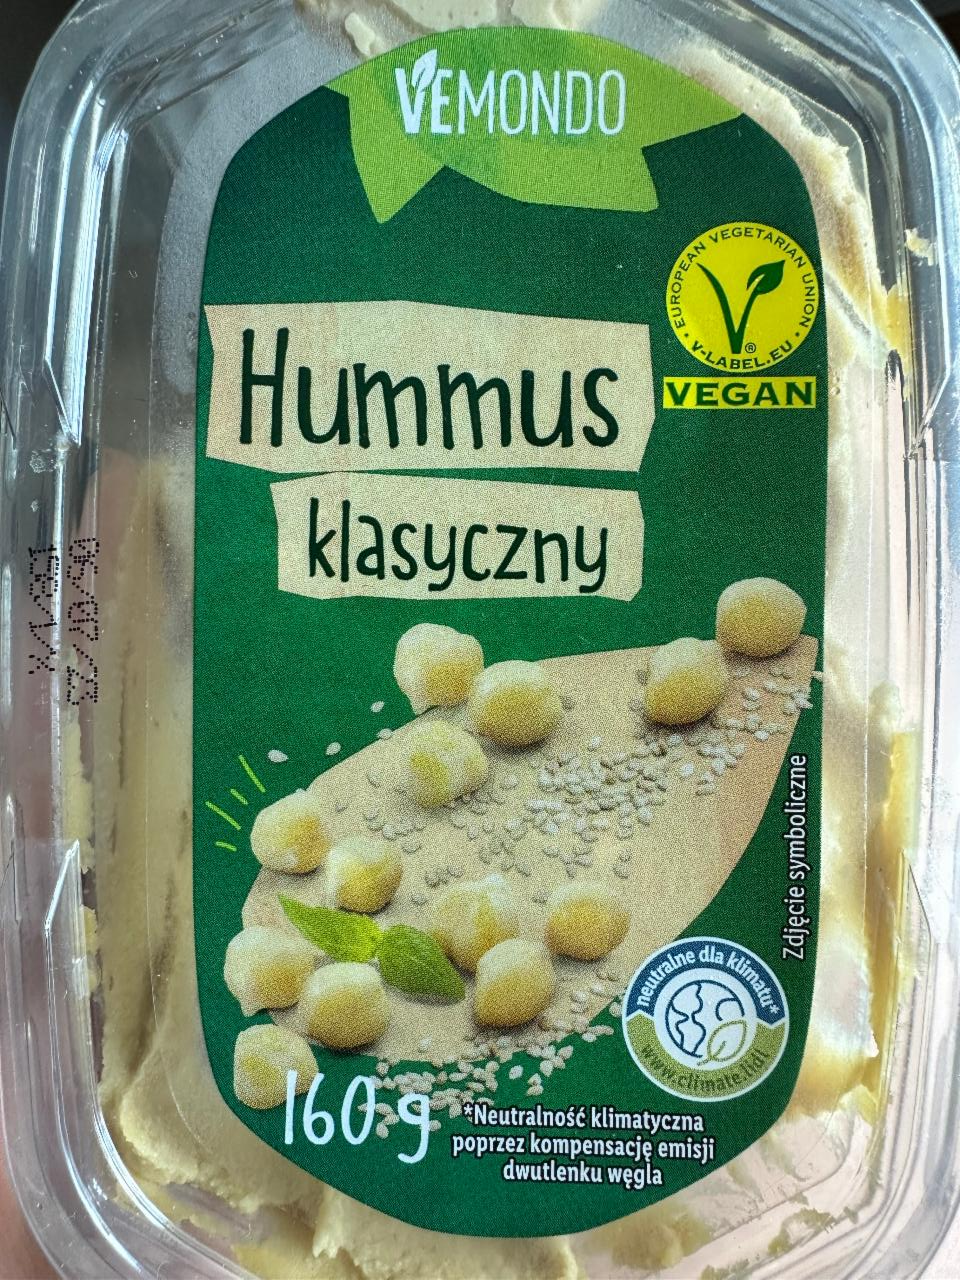 Fotografie - Hummus klasyczny Vemondo